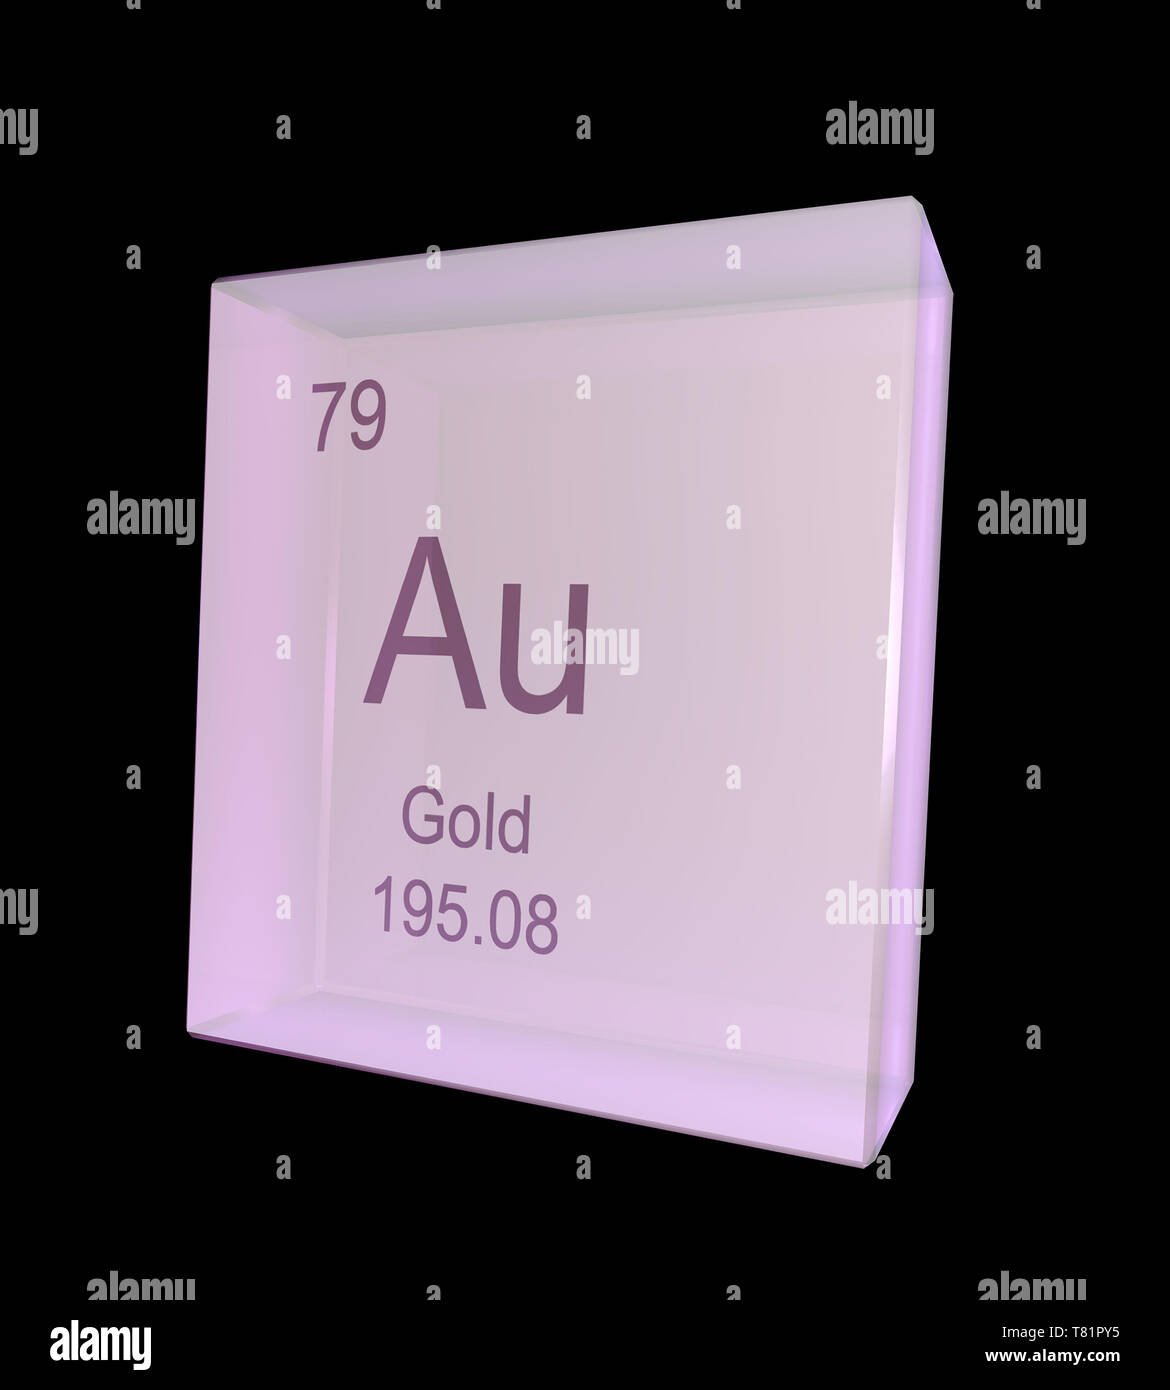 Pink with Metallic Gold symbols – SSxCustomCreations